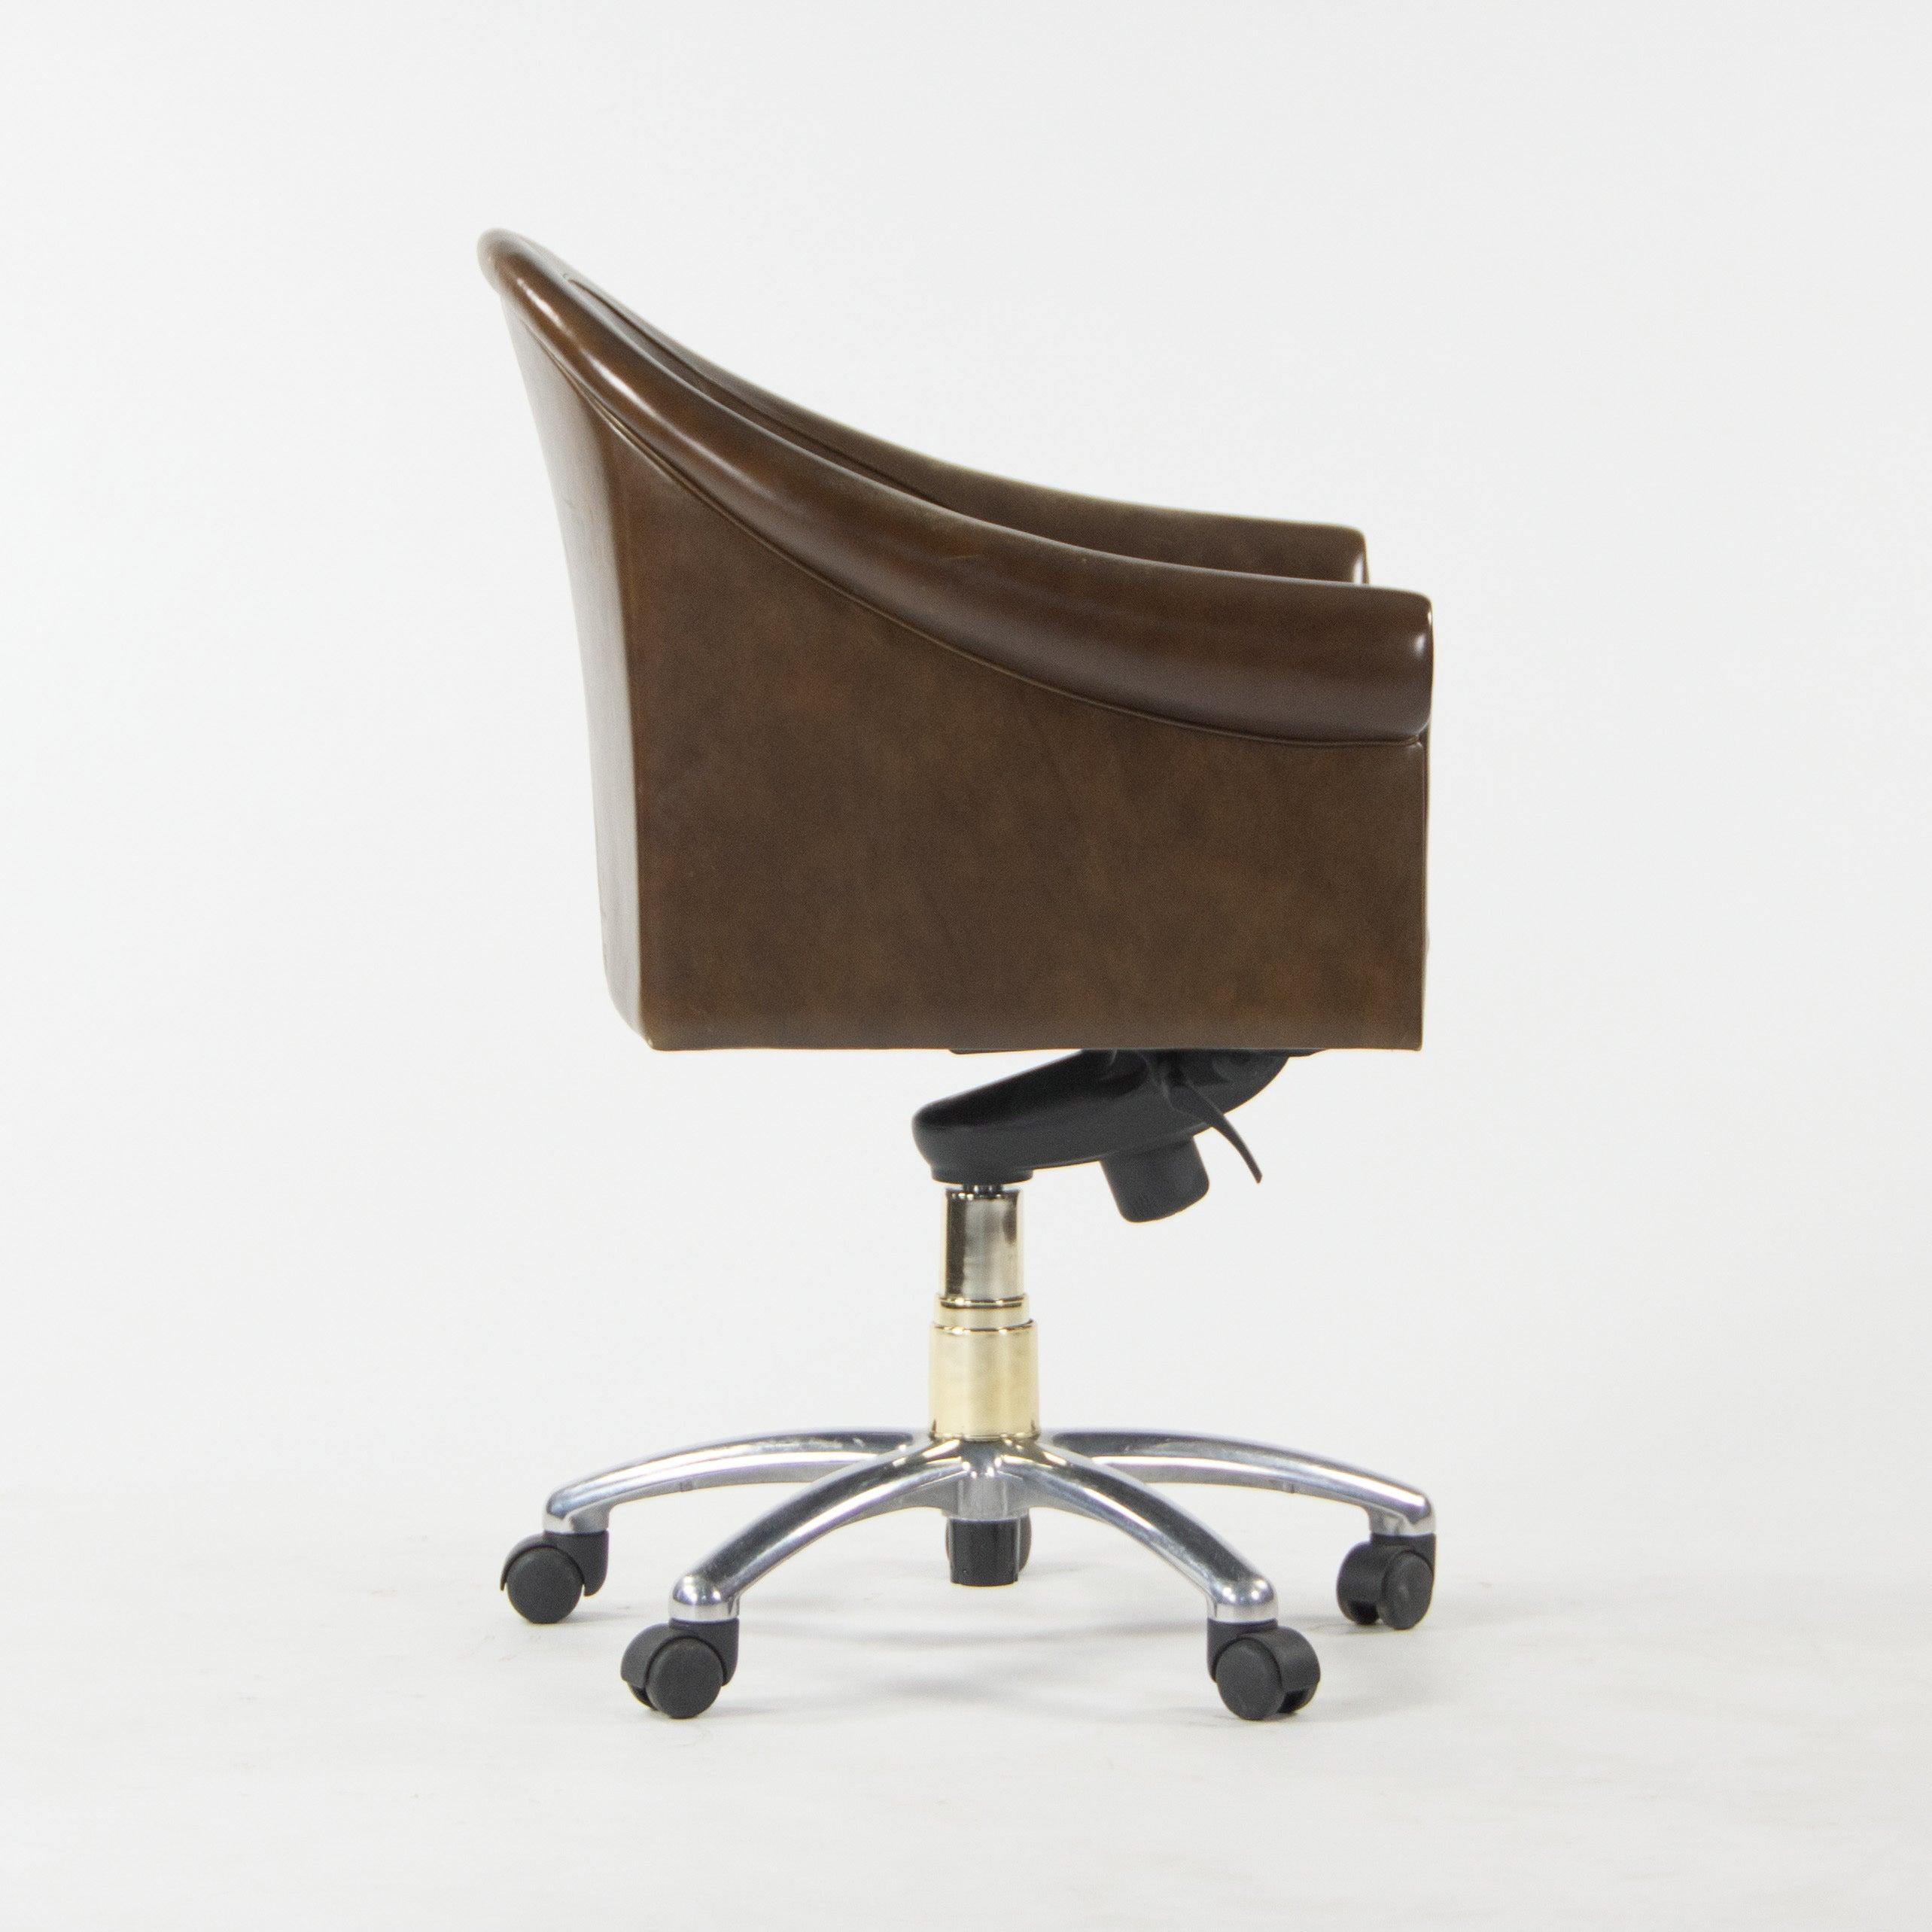 Moderne Poltrona Frau Brown Leather Luca Scacchetti Sinan Office Desk Chair en vente